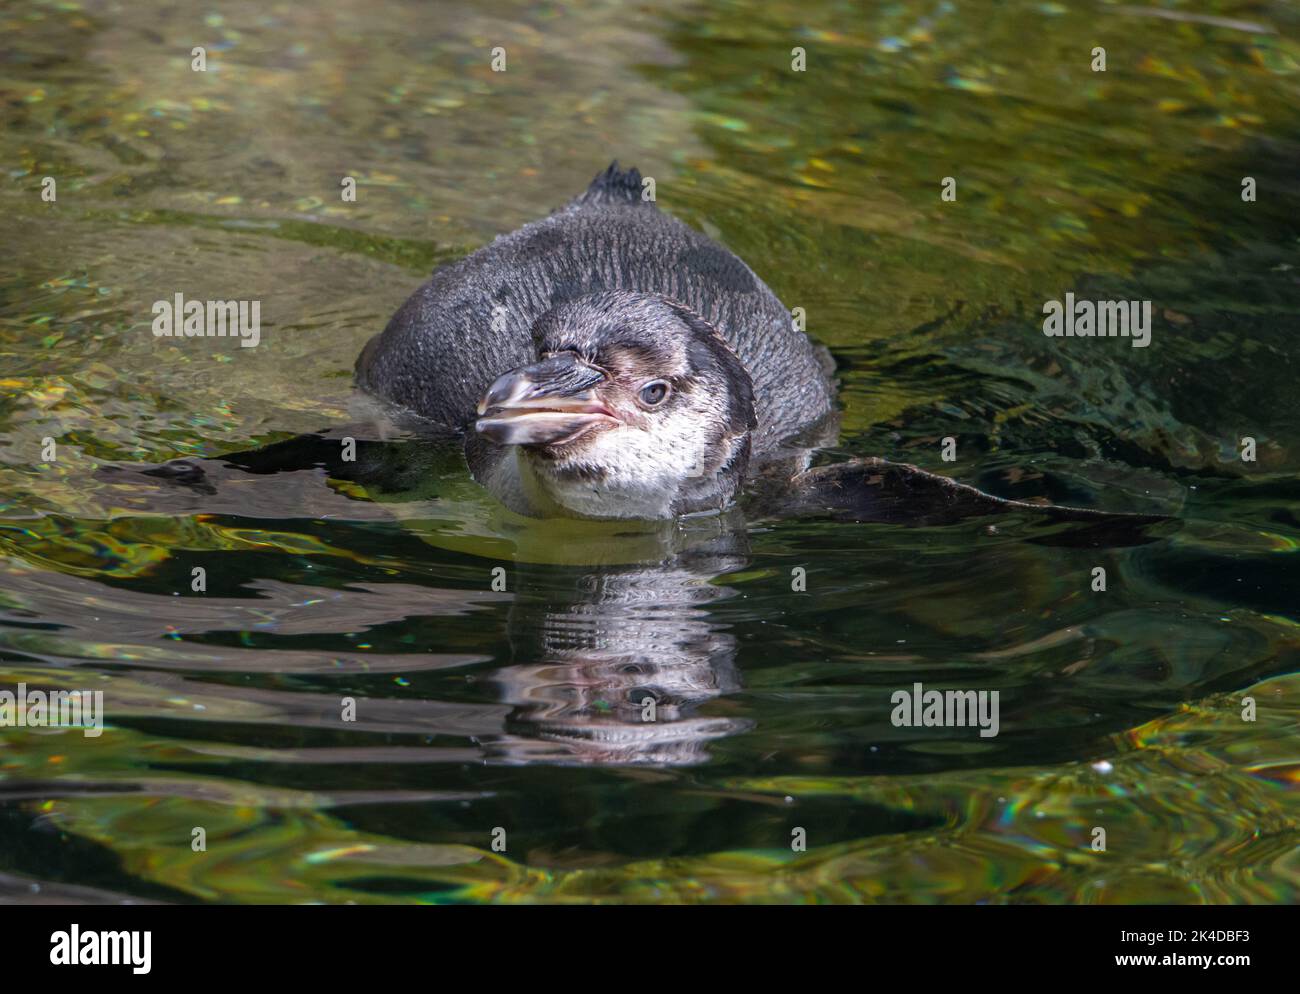 The Humboldt penguin (Spheniscus humboldti) swim in a water Stock Photo